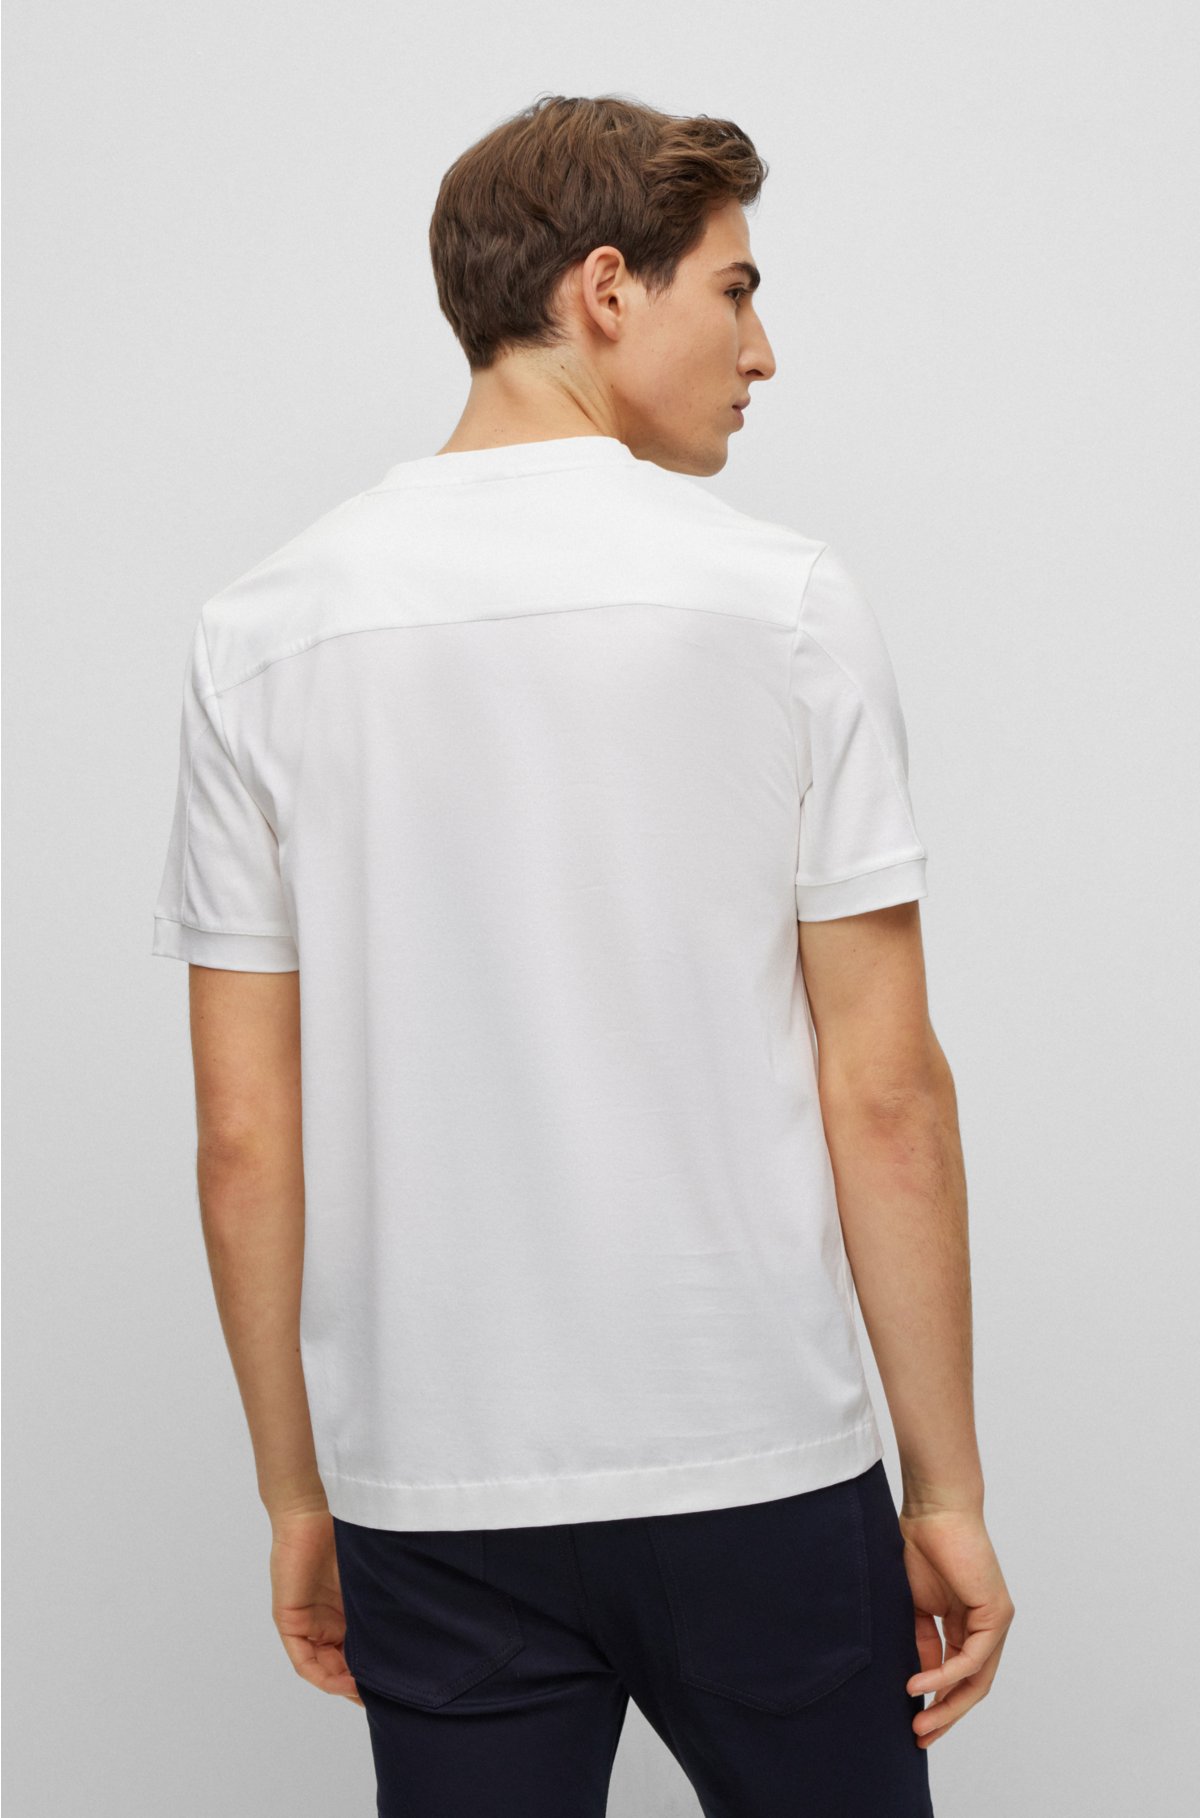 Louis Vuitton Damier Spread Printed Sweat Crew Neck Shirt Cotton Gray S  TGIS